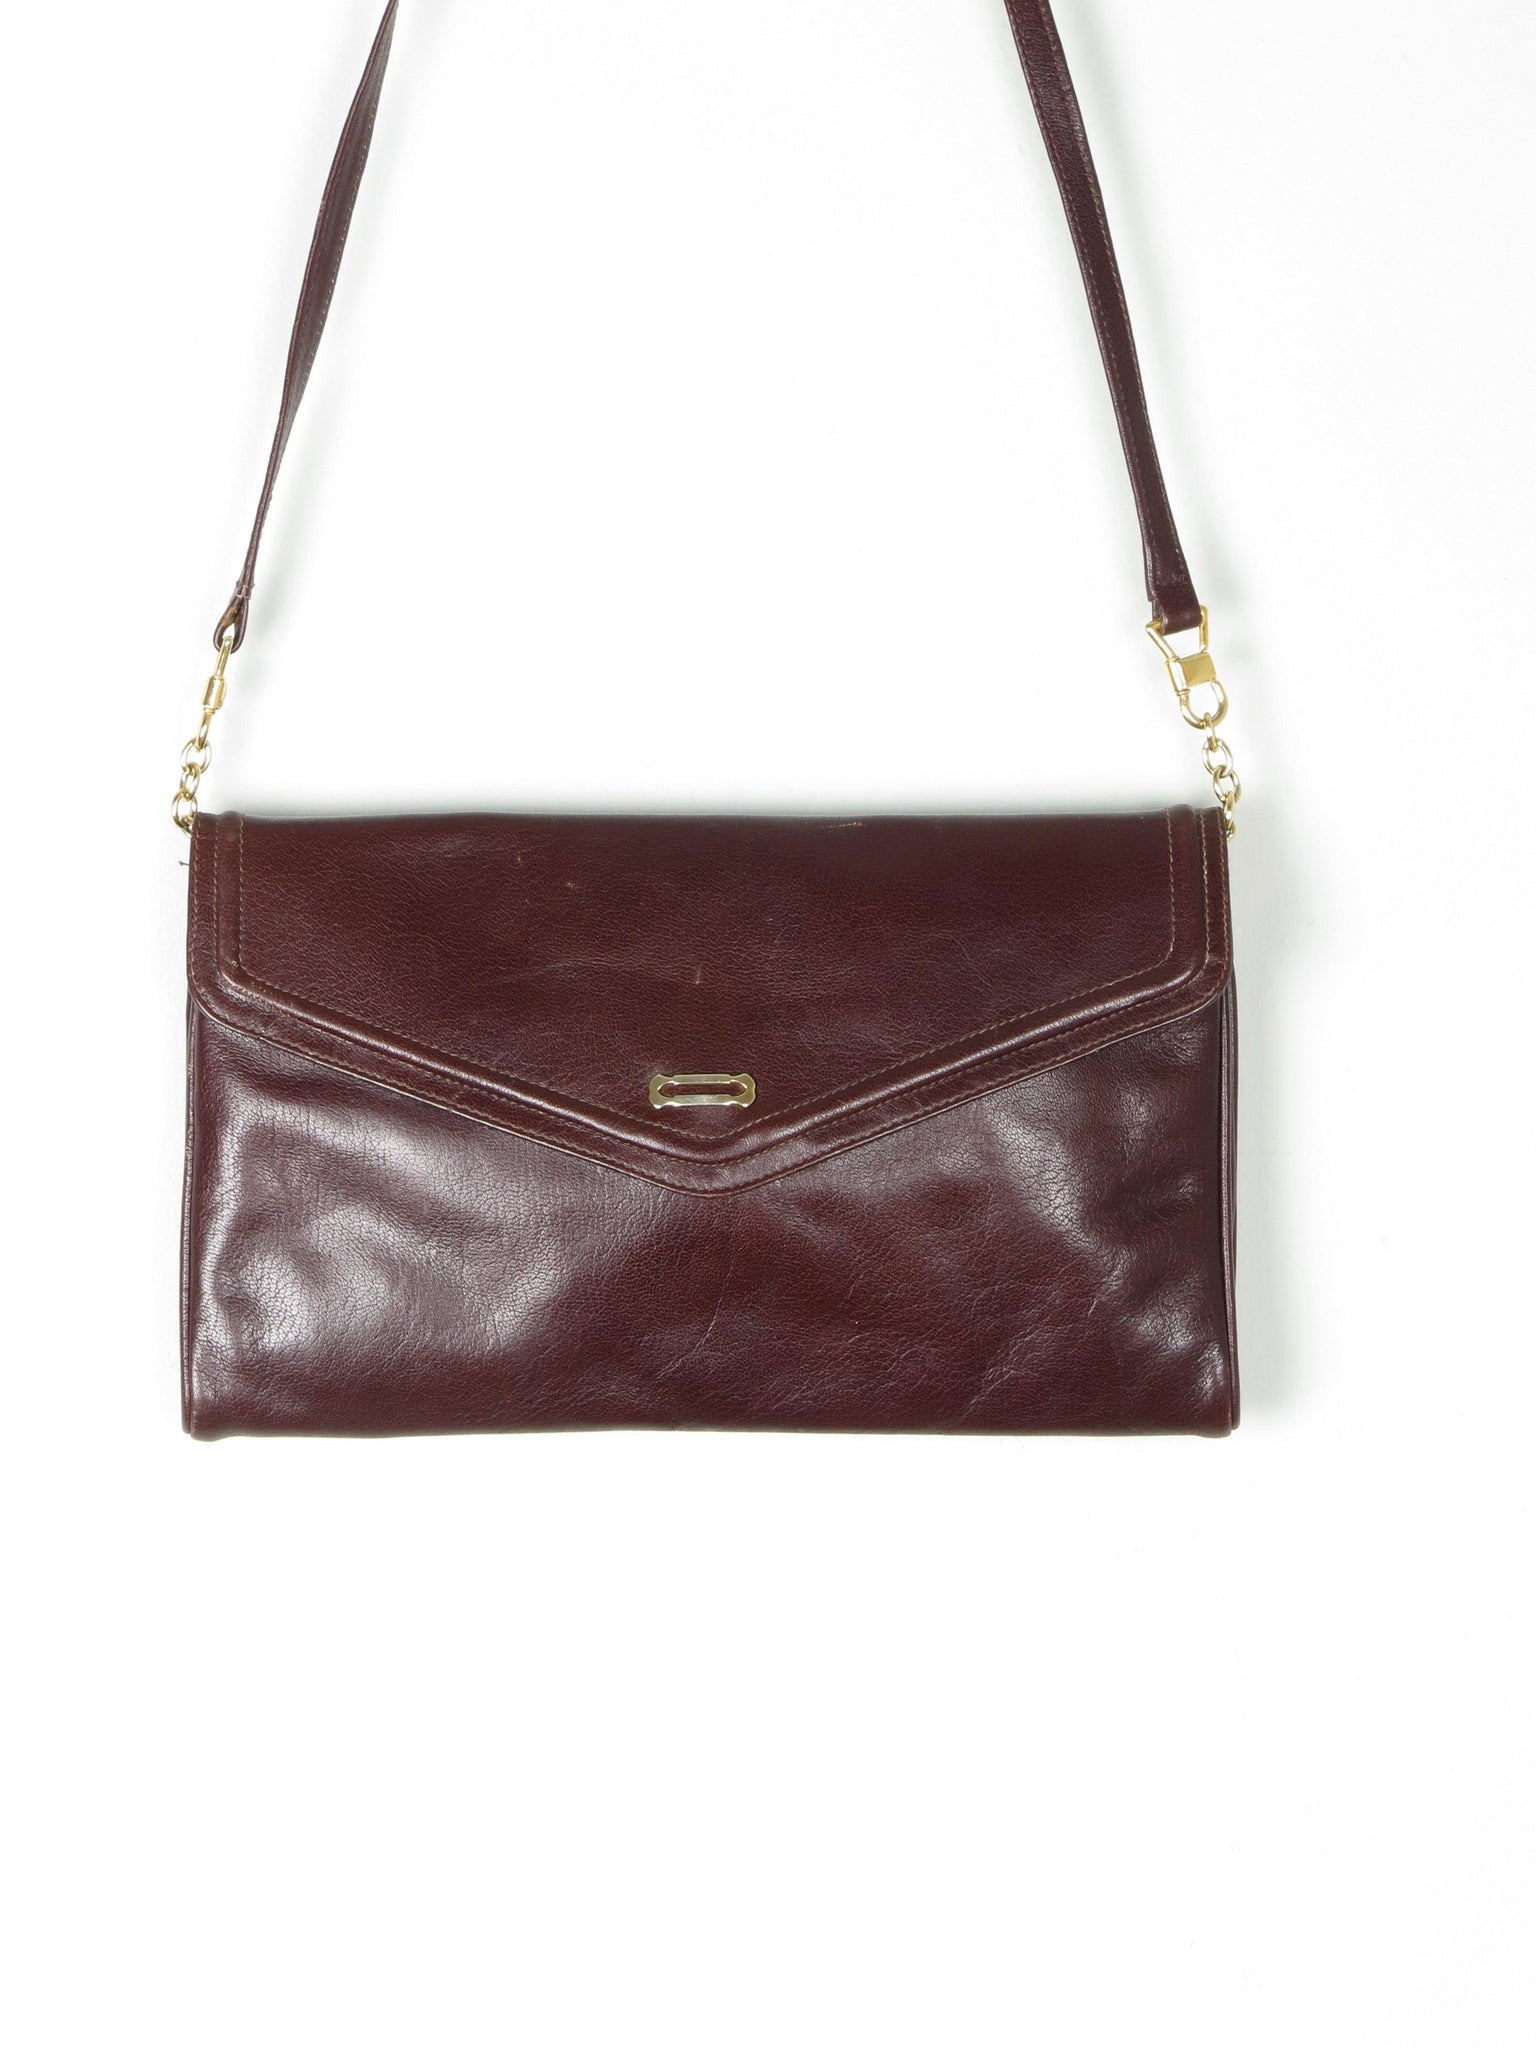 1970s Brown Leather Envelope Handbag With Strap - The Harlequin